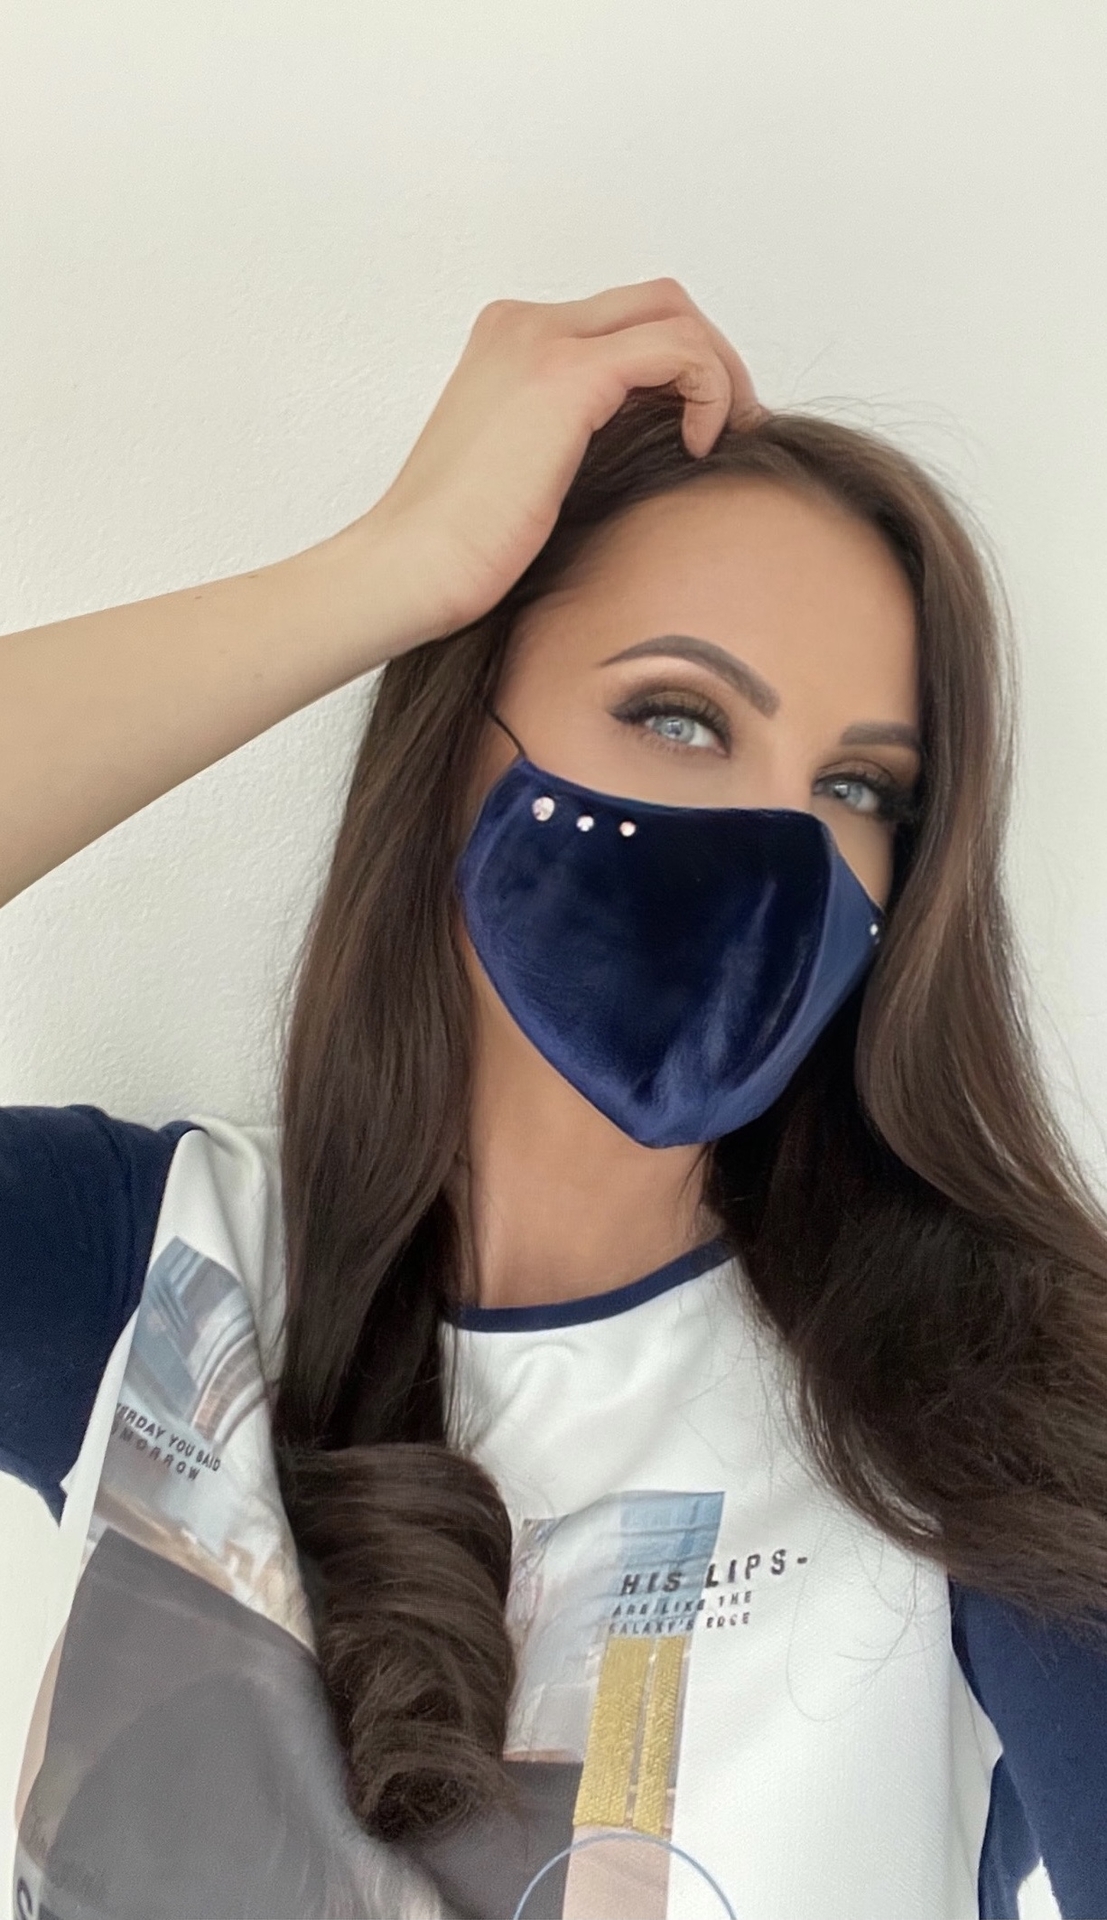 Fashion mask - Sofia velvet royal blue